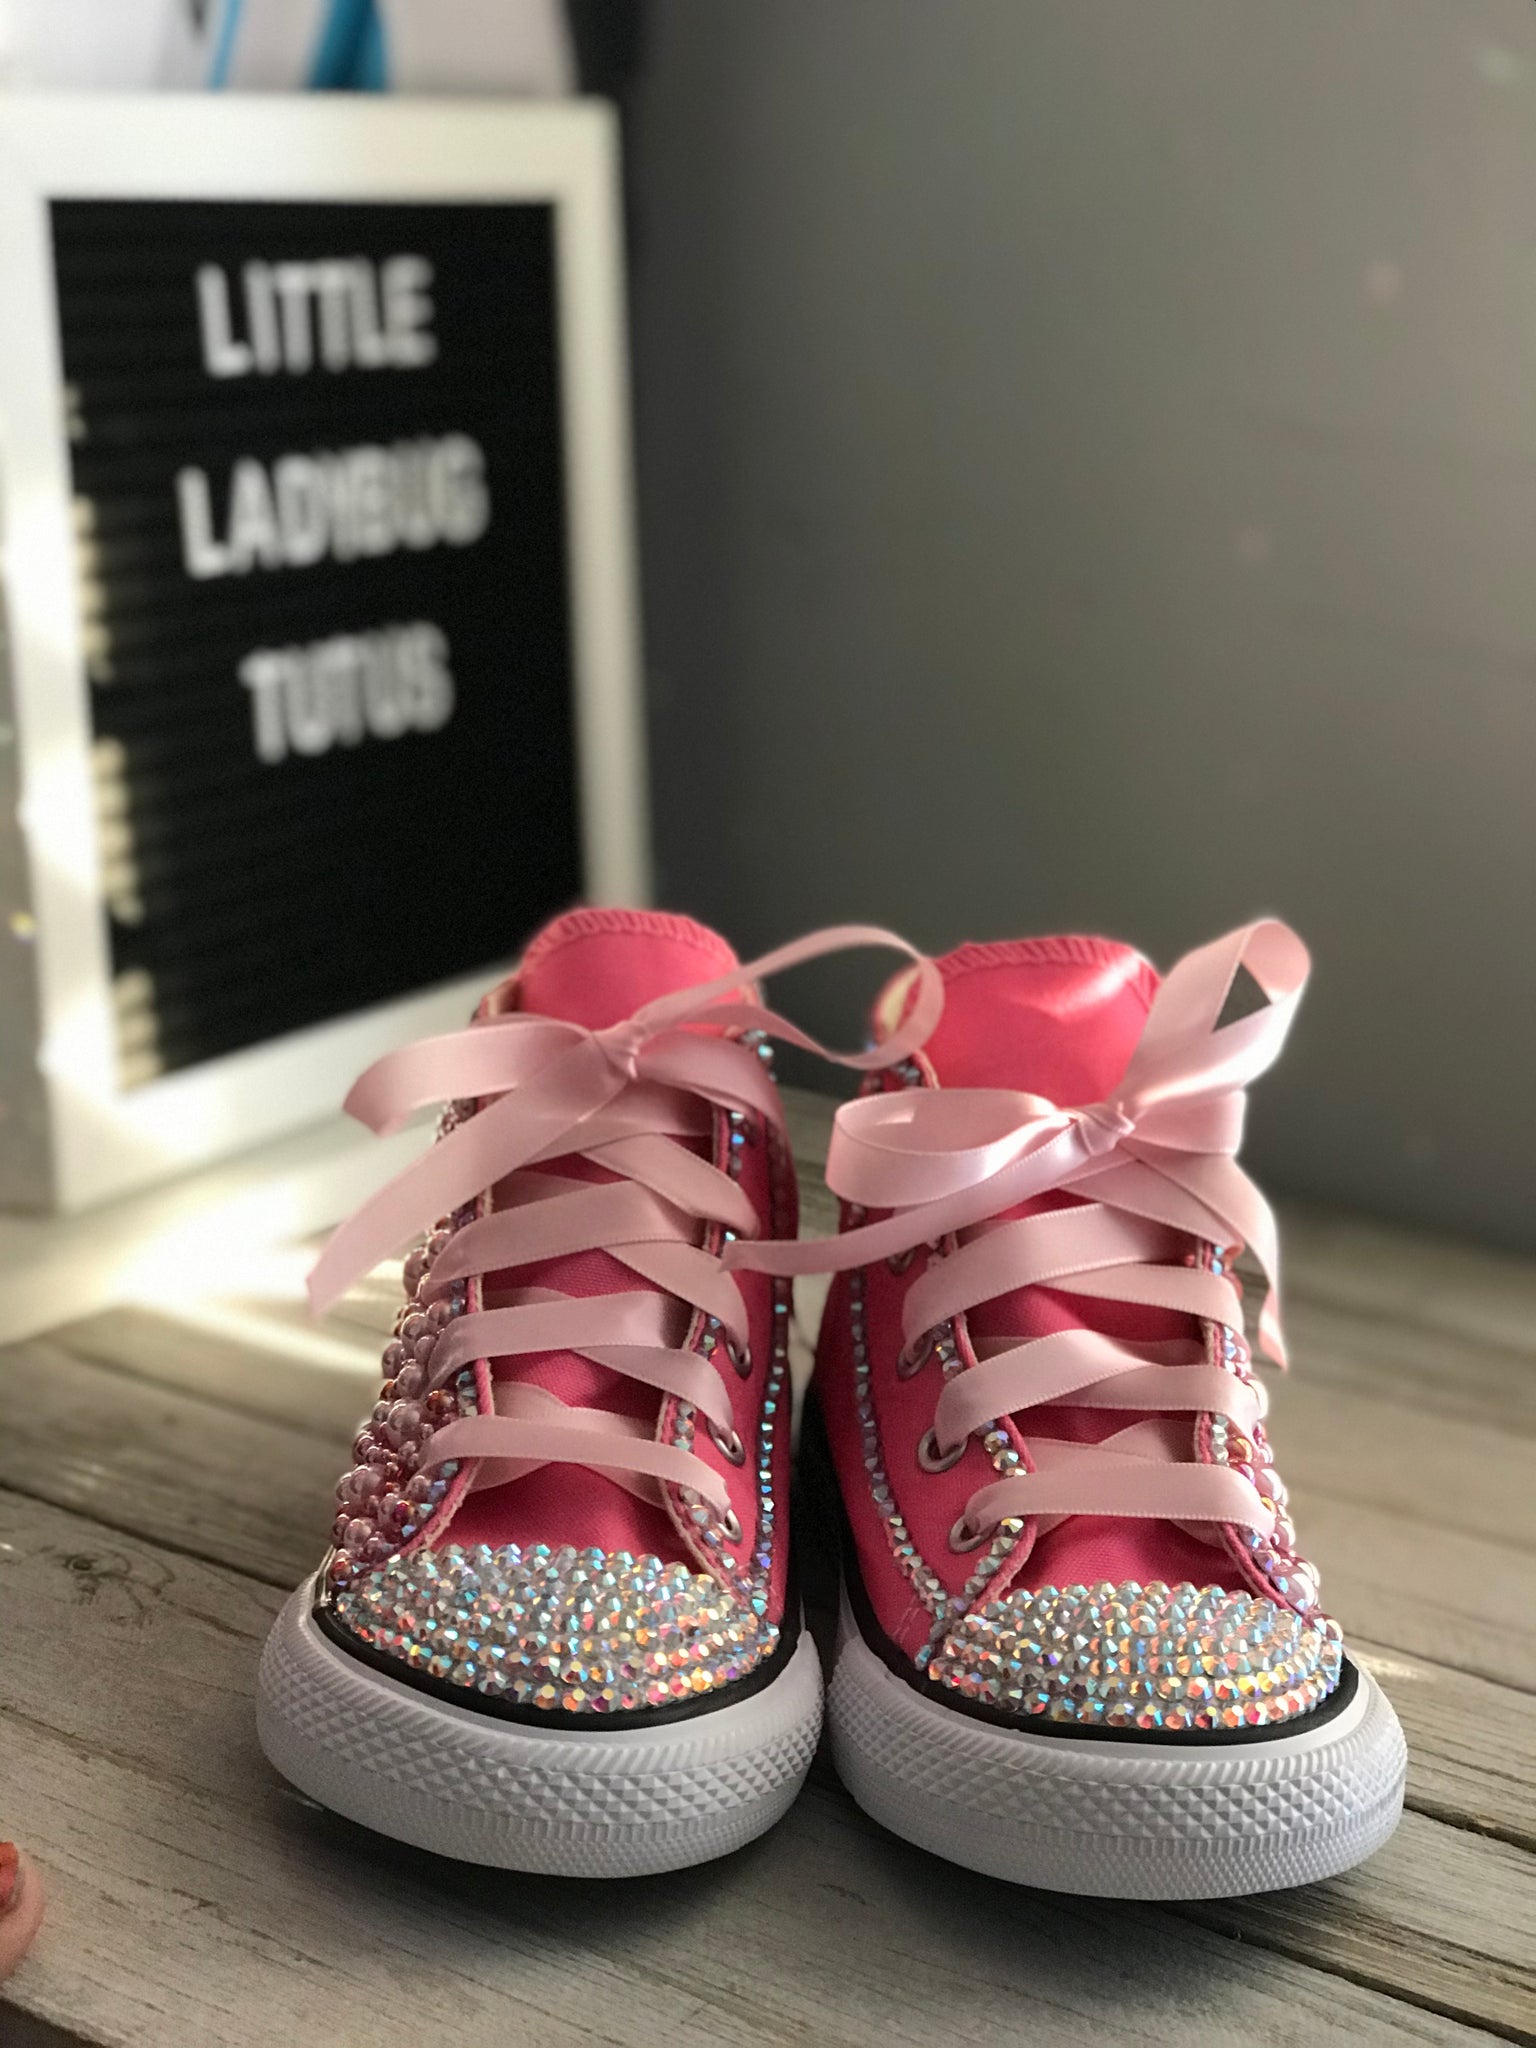 subtropisk bund skjorte Pink Bedazzled Converse Sneakers | Little Ladybug Tutus